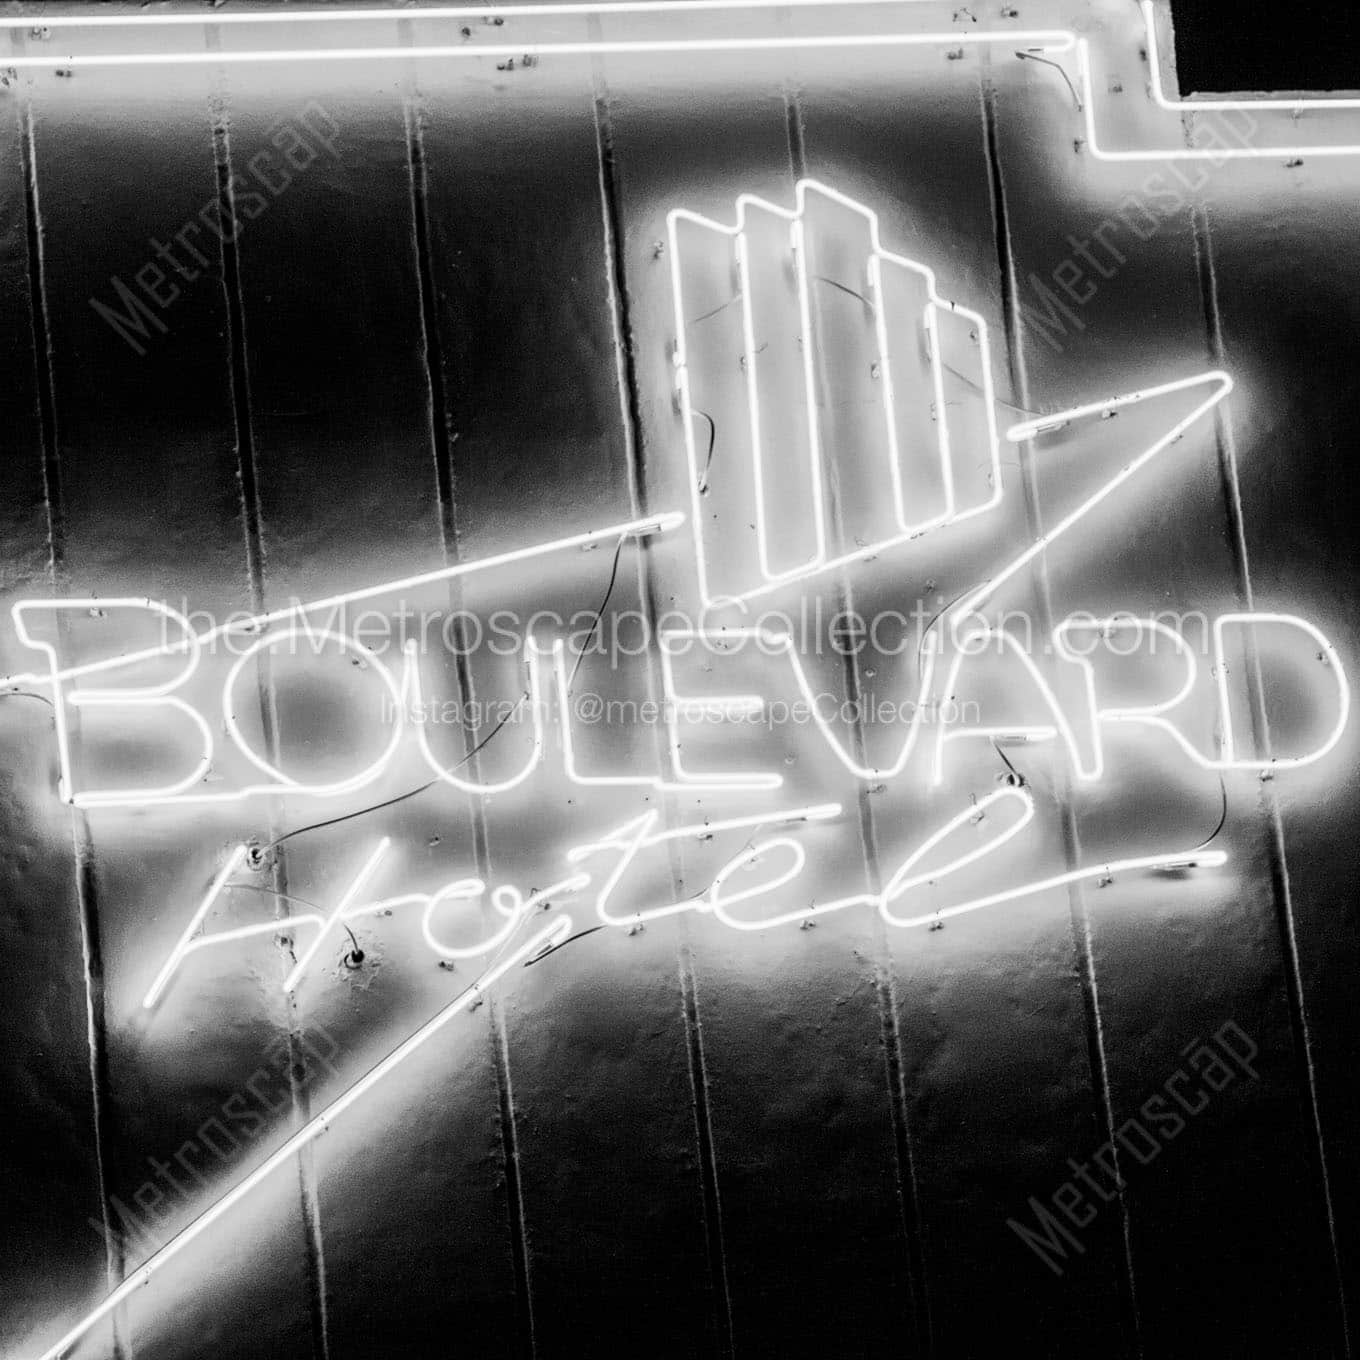 boulevard hotel sign south beach Black & White Wall Art